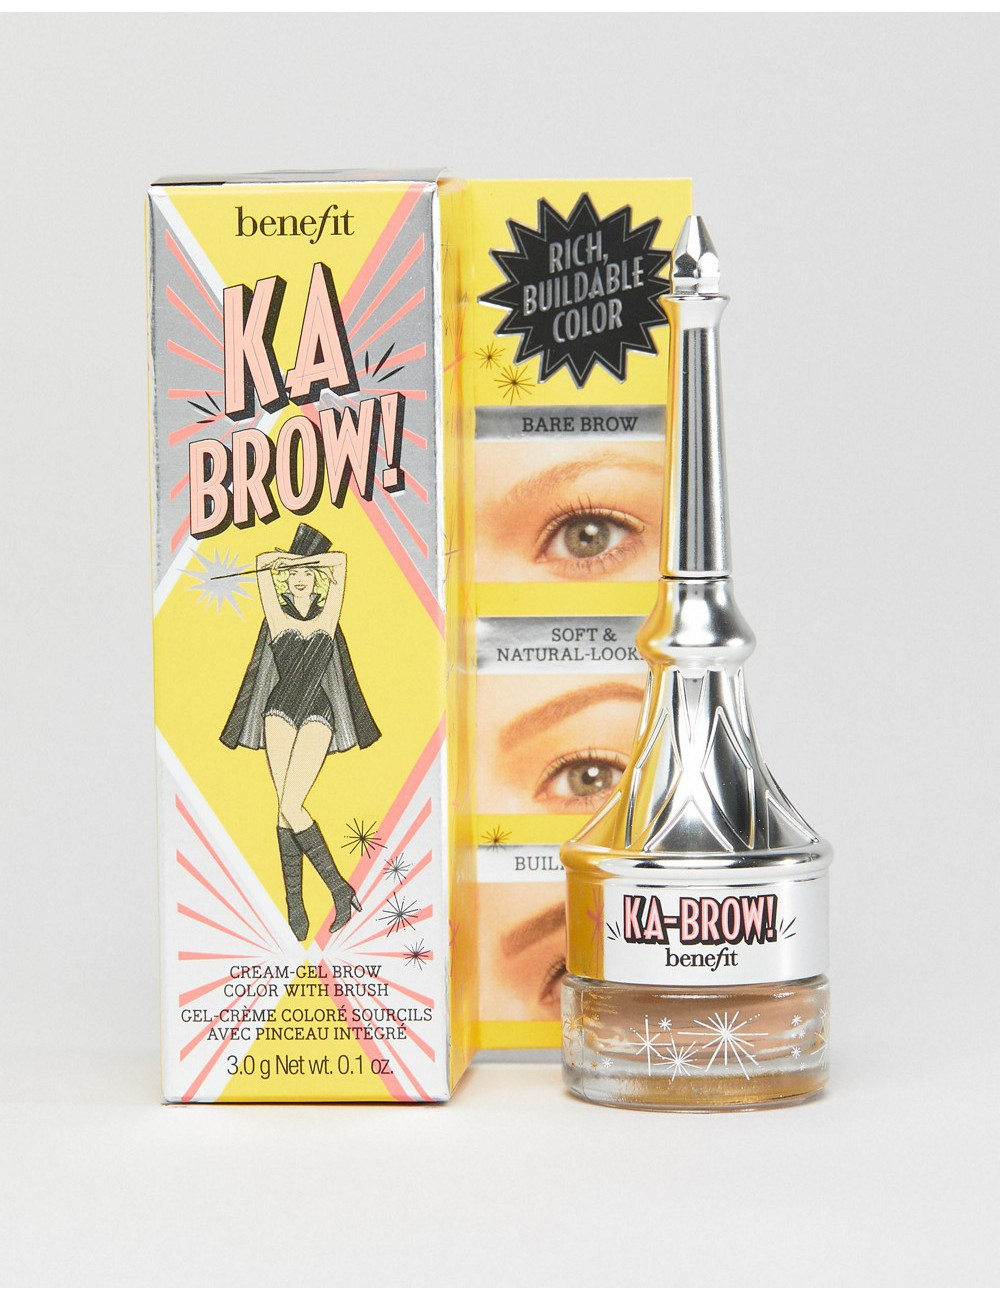 Benefit Ka-Brow!